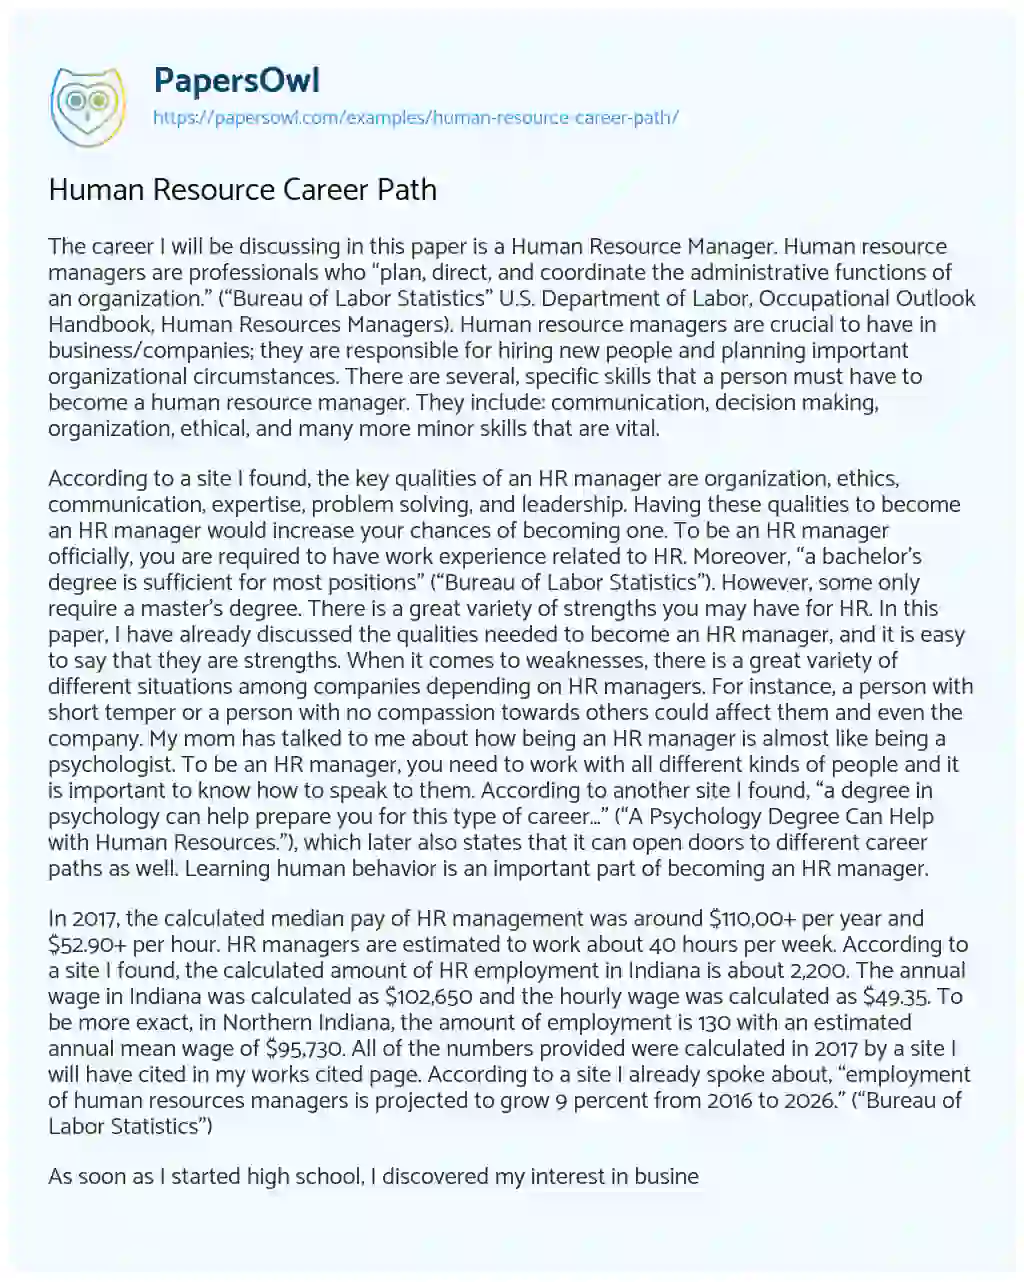 Essay on Human Resource Career Path